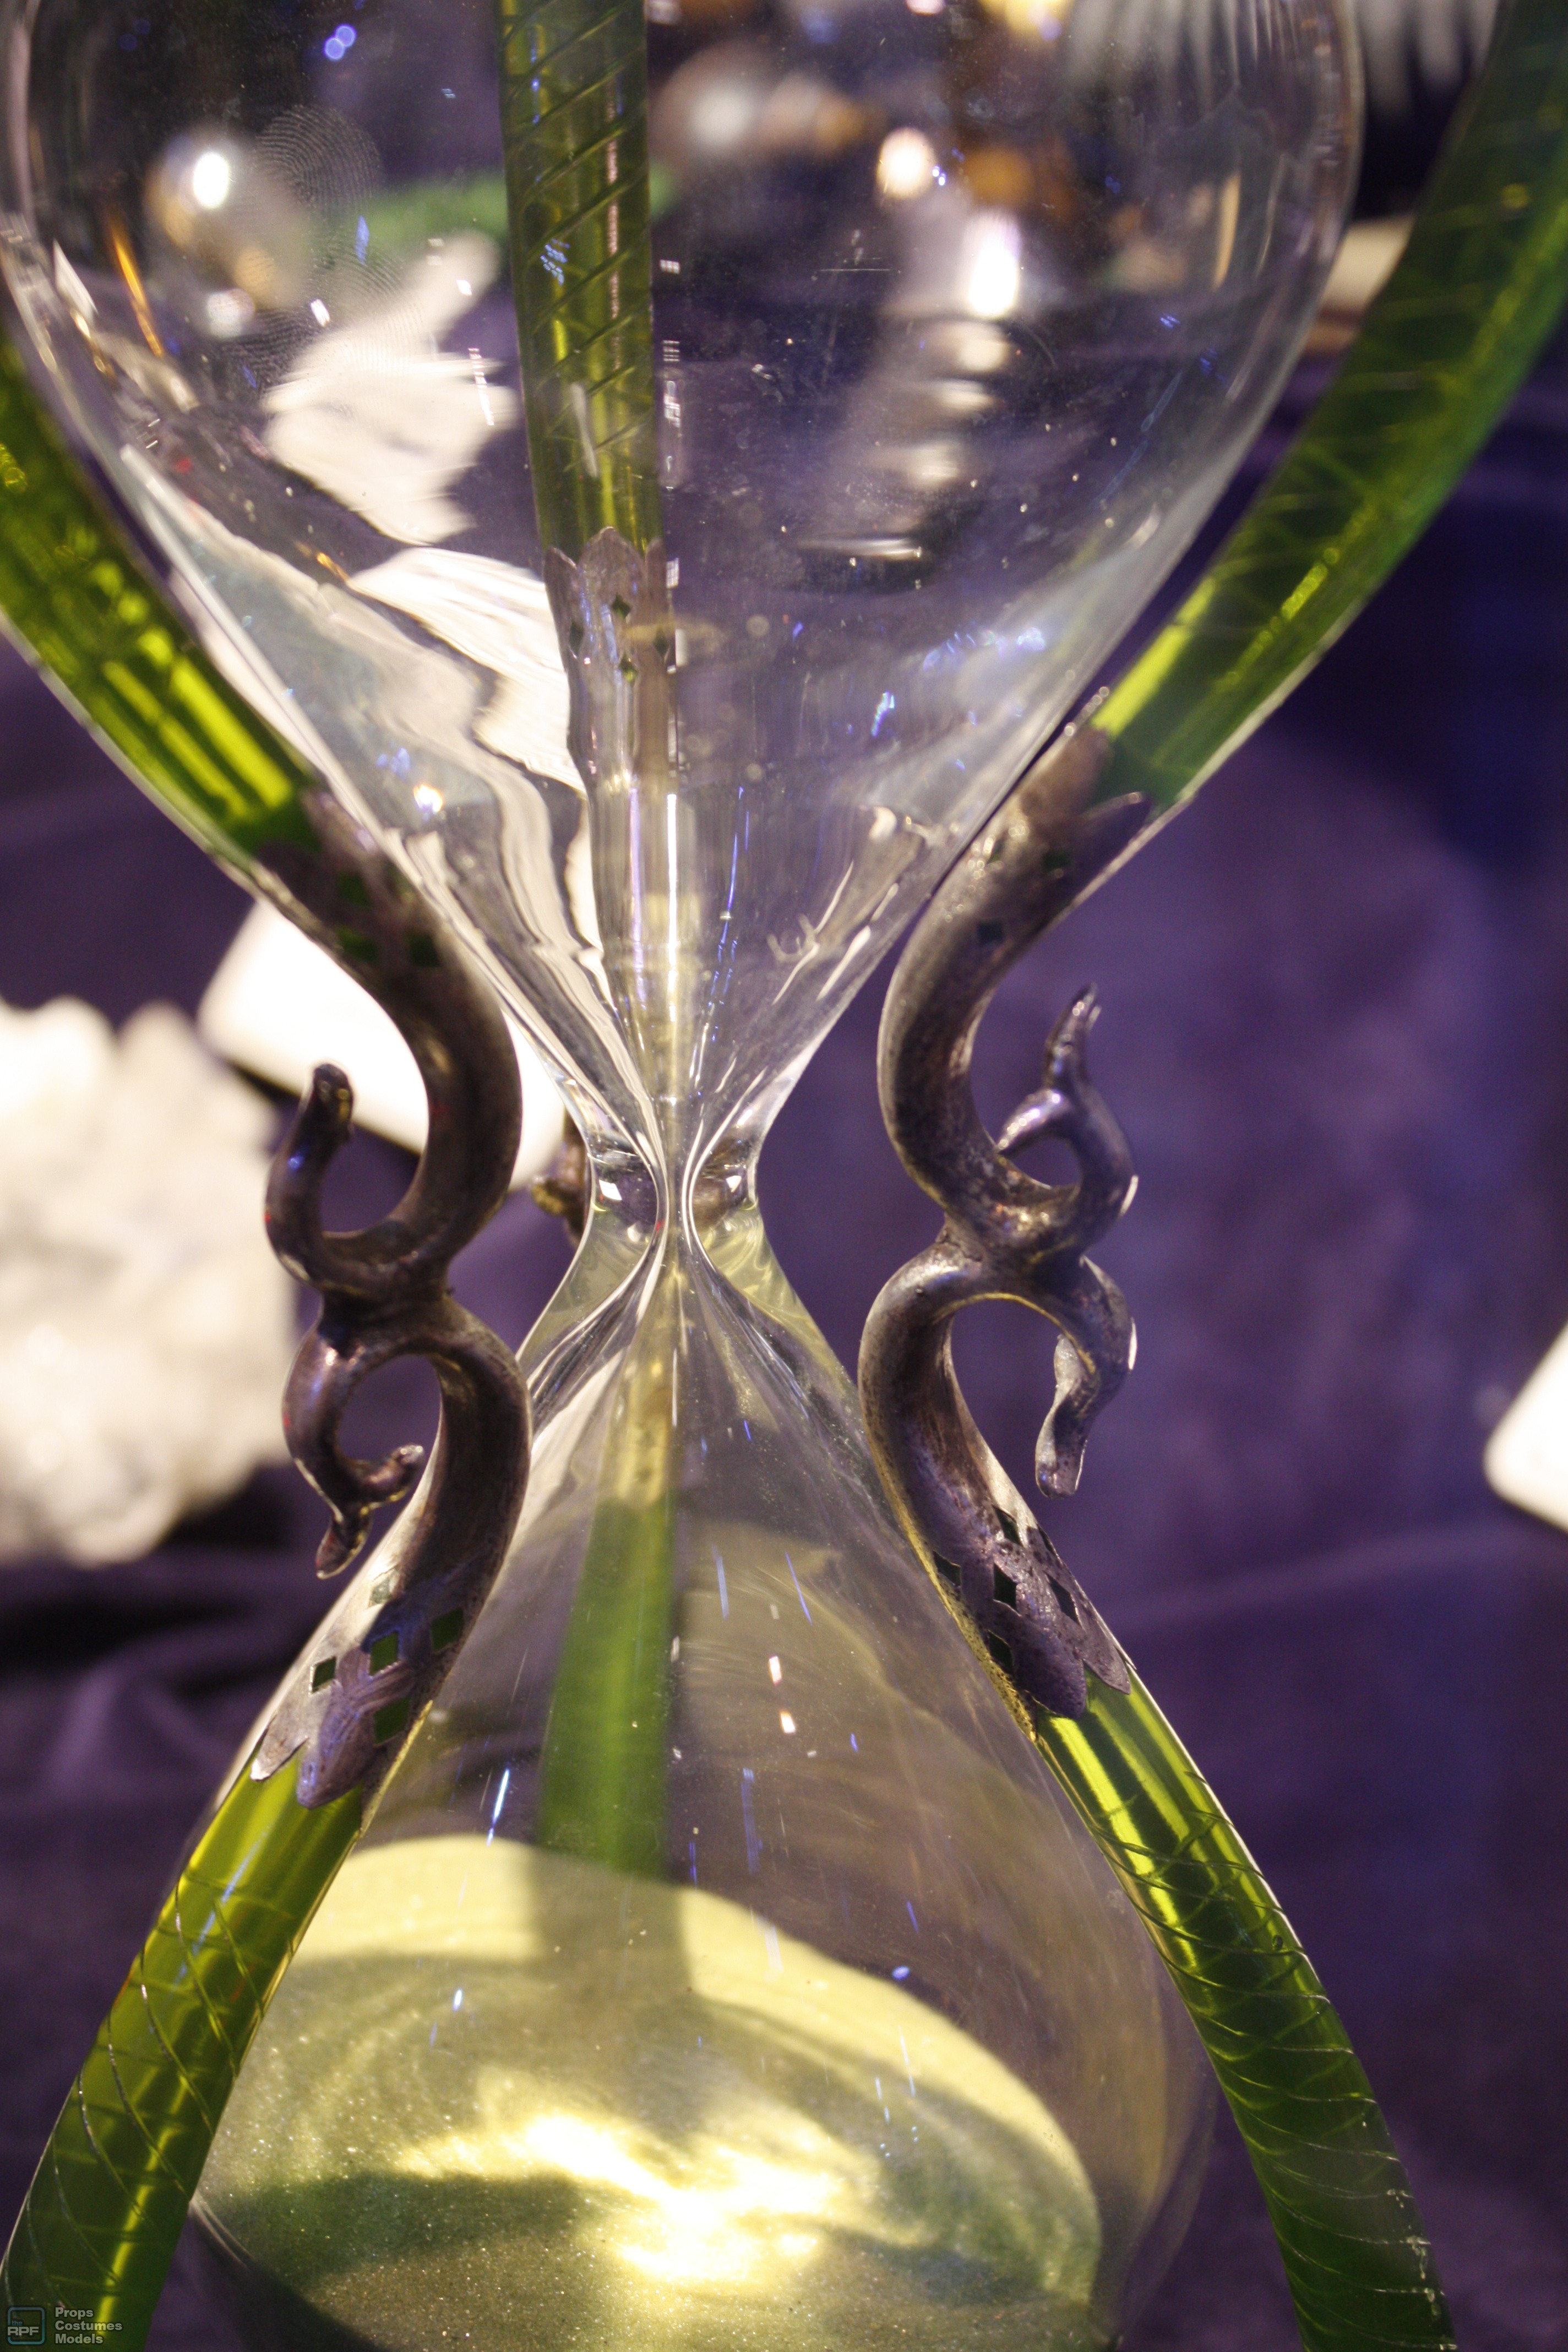 Slughorns hourglass